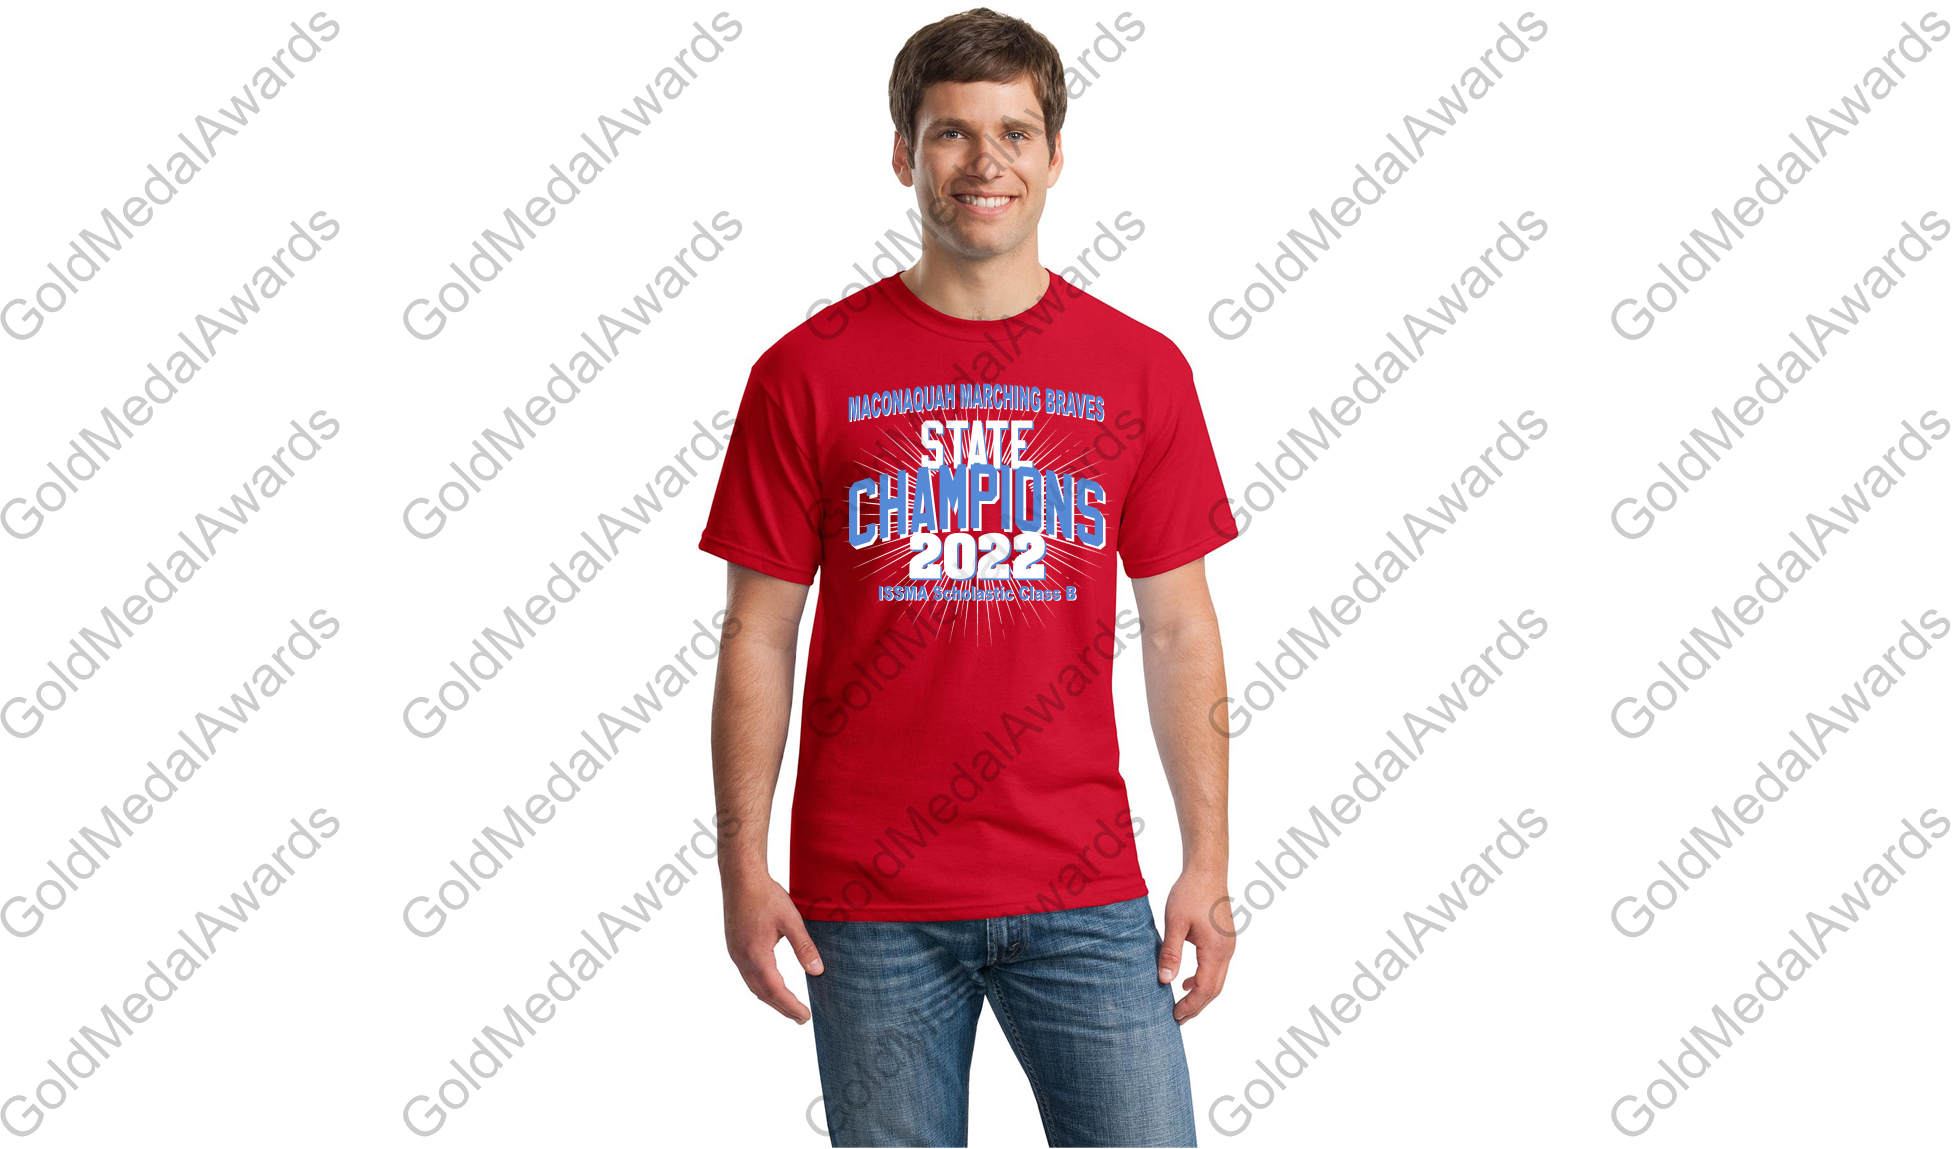 2022 STATE CHAMPIONS T-Shirt